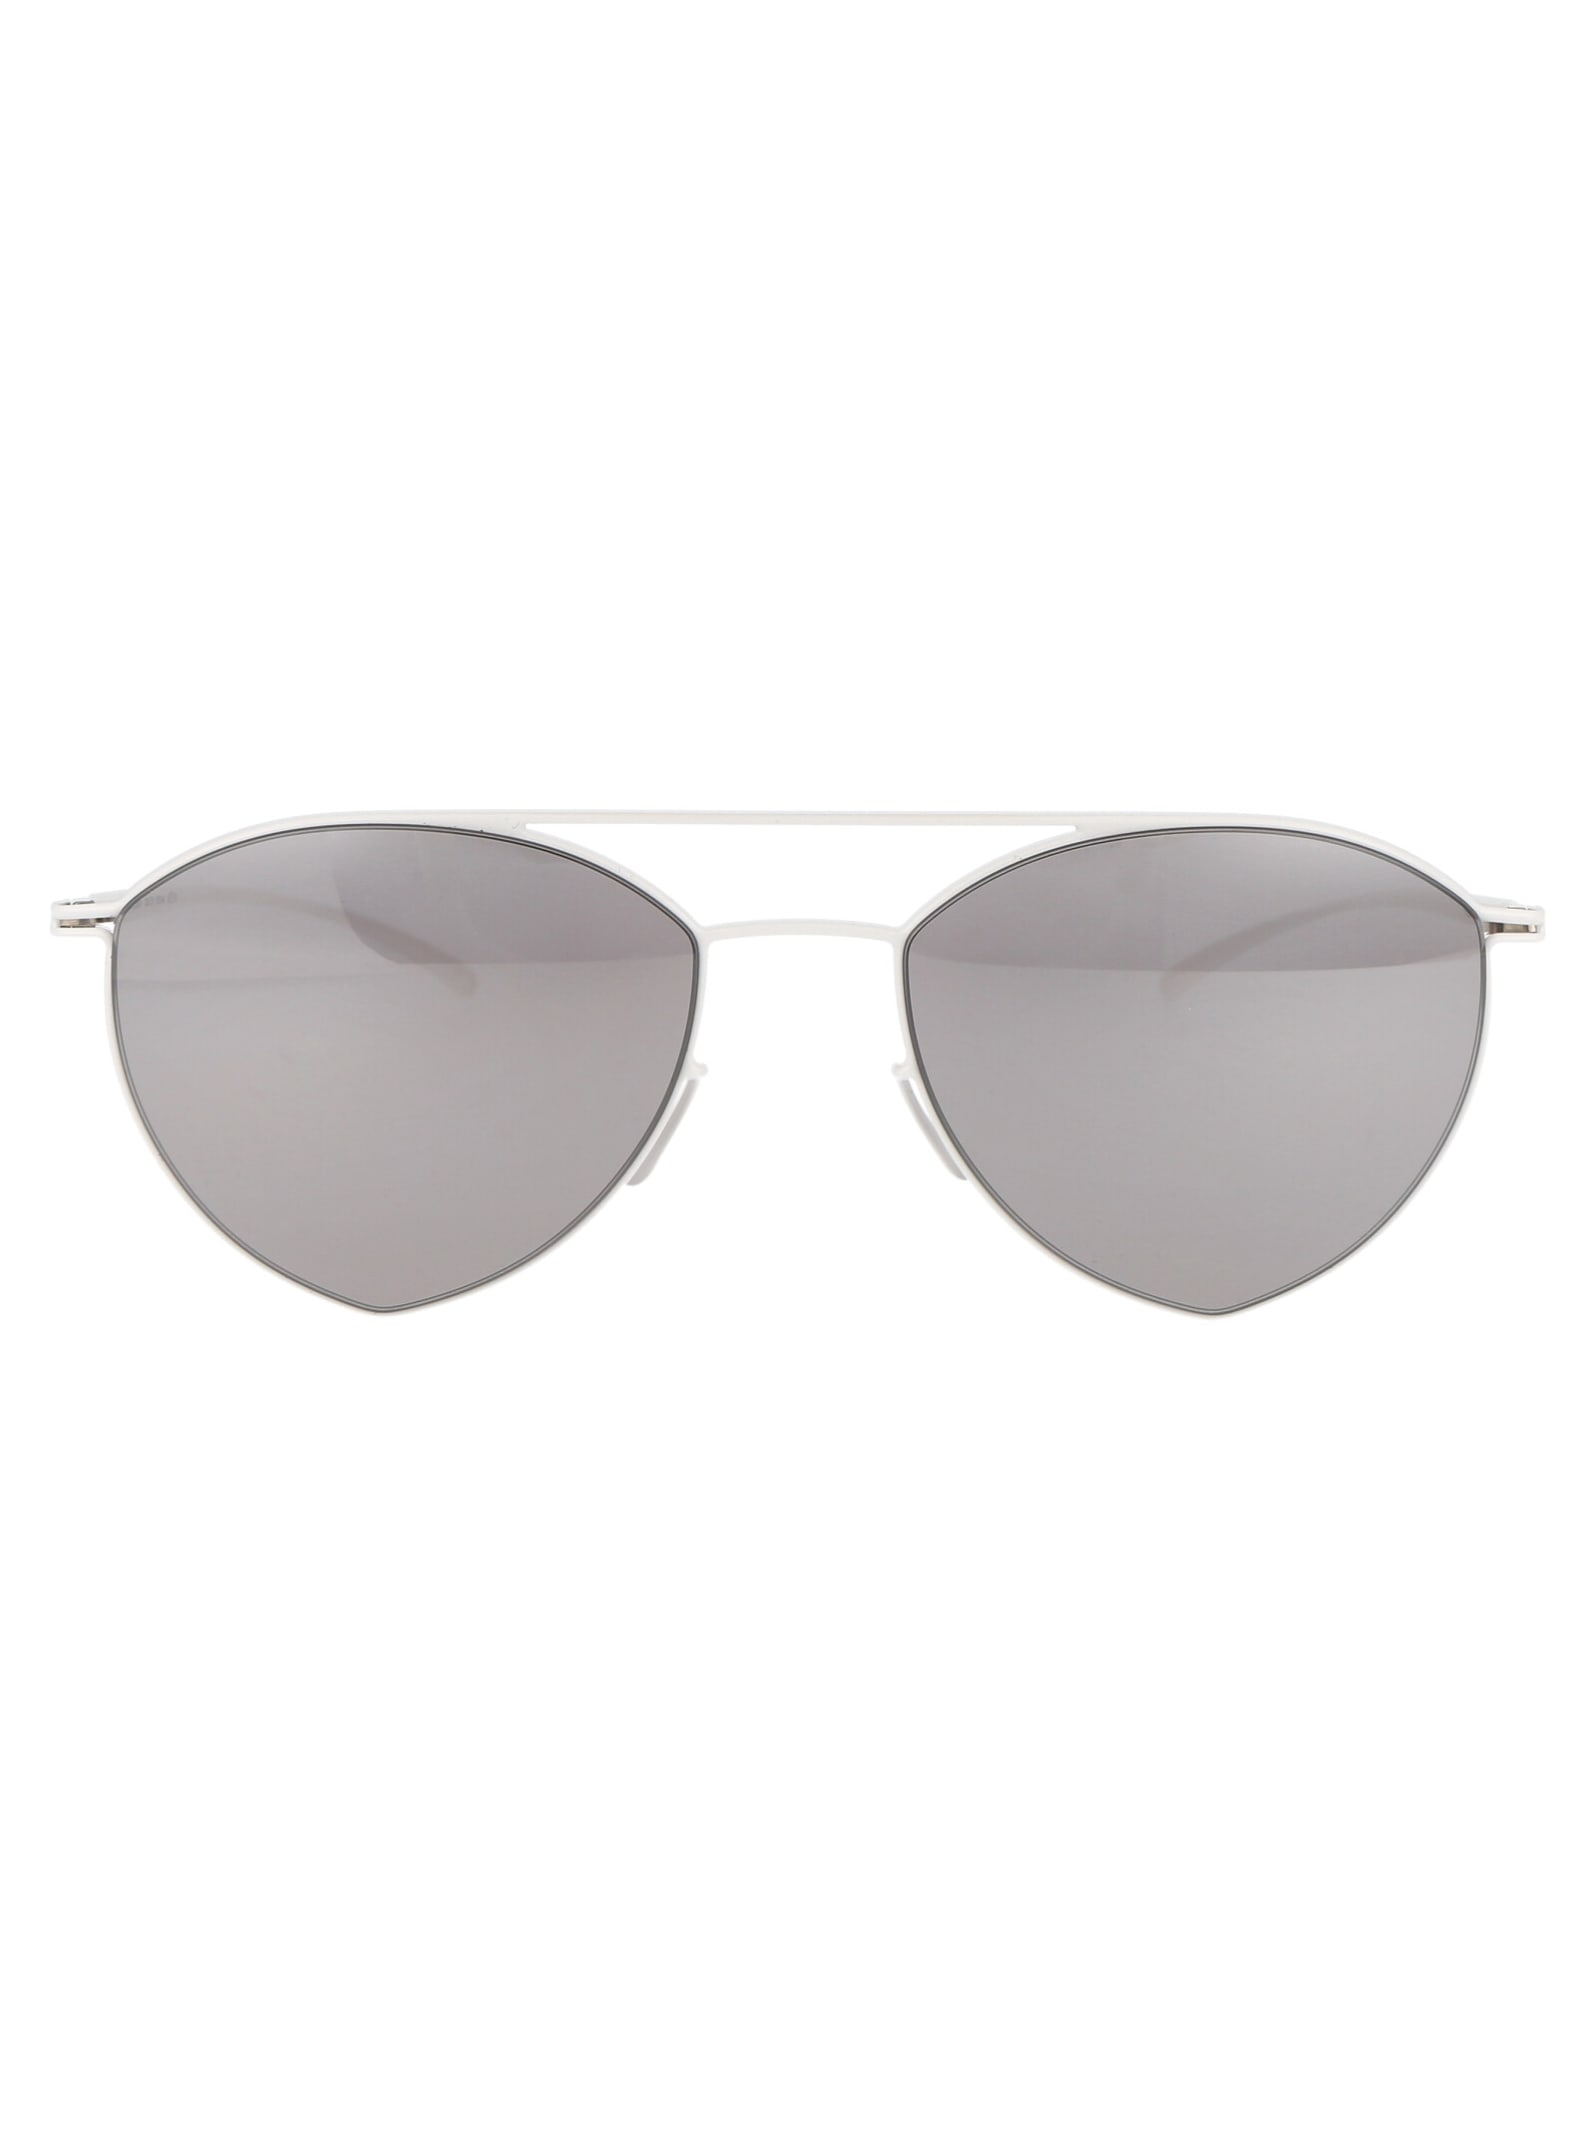 Shop Mykita Mmesse010 Sunglasses In 333 E13 White Warm Grey Flash